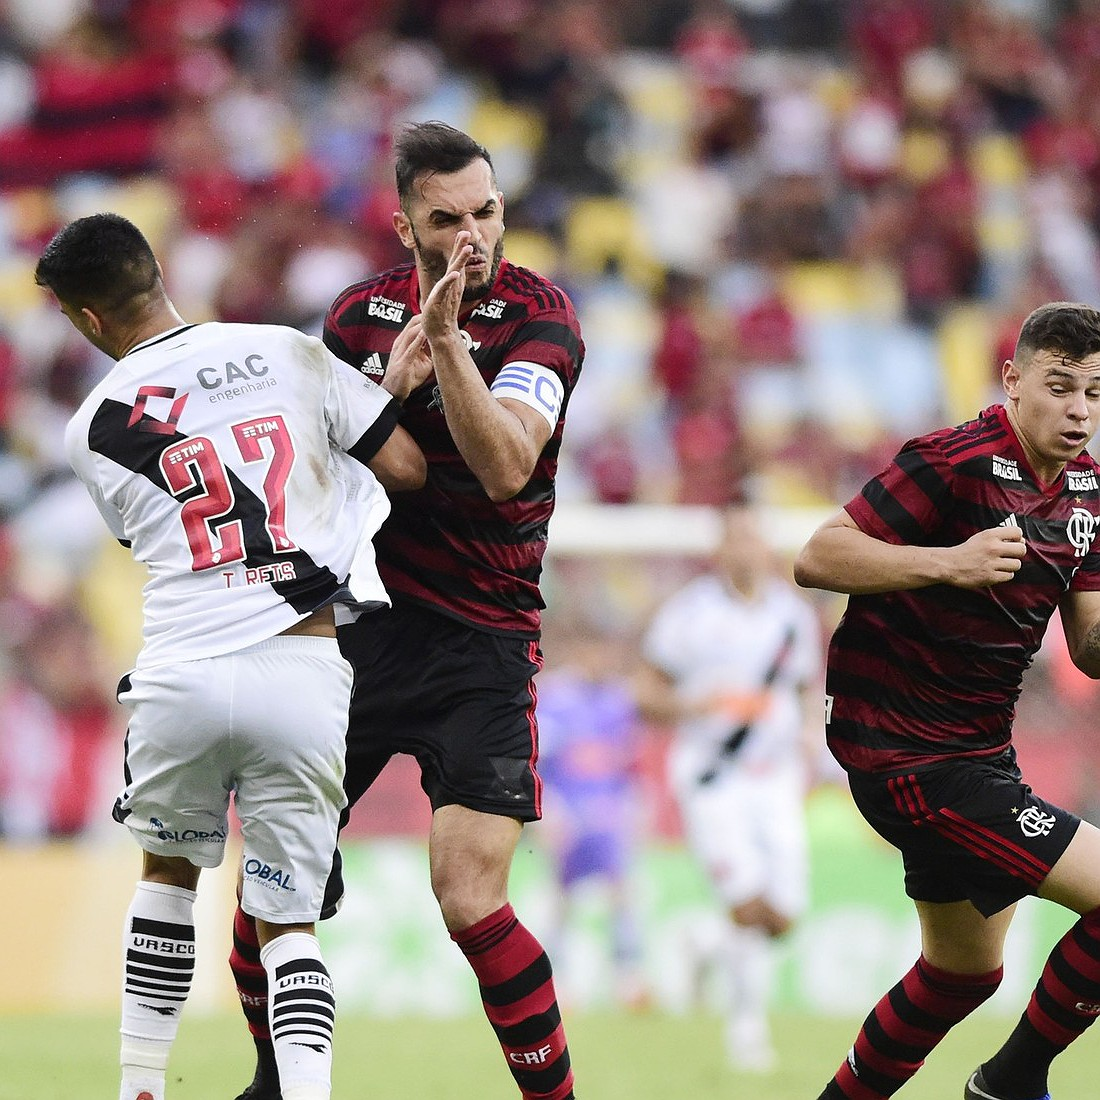 Fala, Fera! #2: a final do Campeonato Carioca 2019